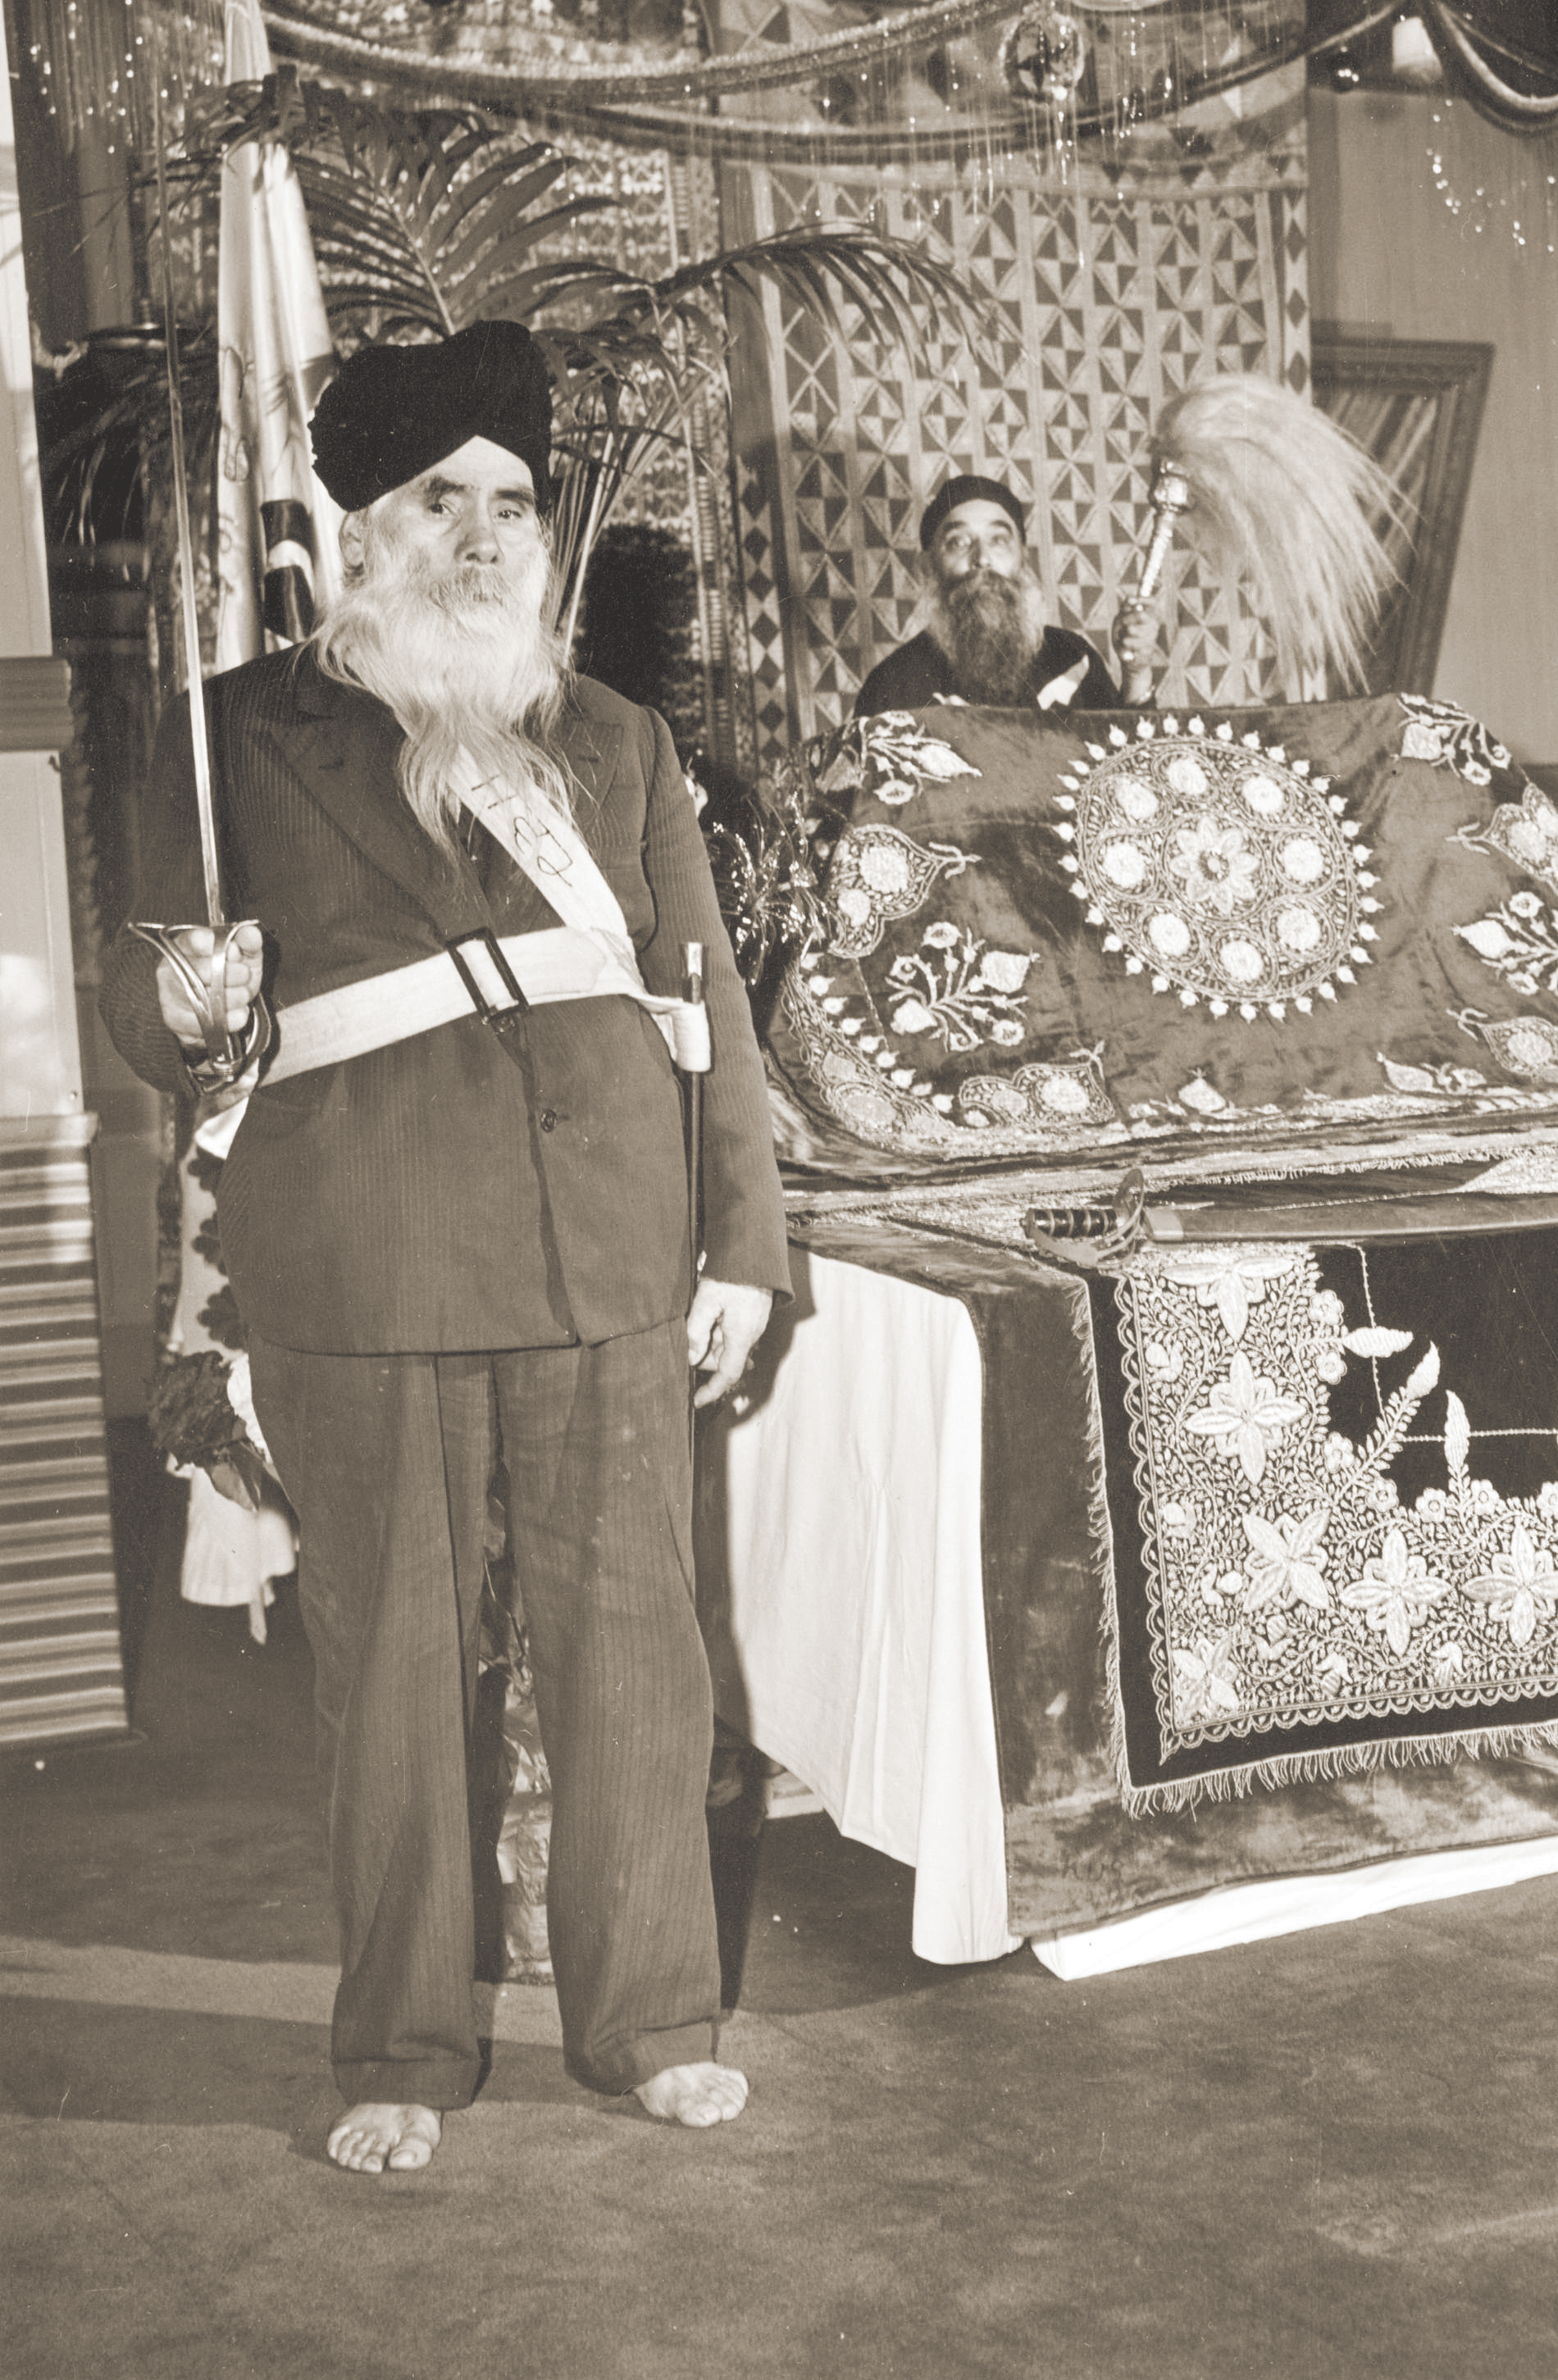 Worshipping inside the Khalsa Diwan Society Sikh Temple, 1945